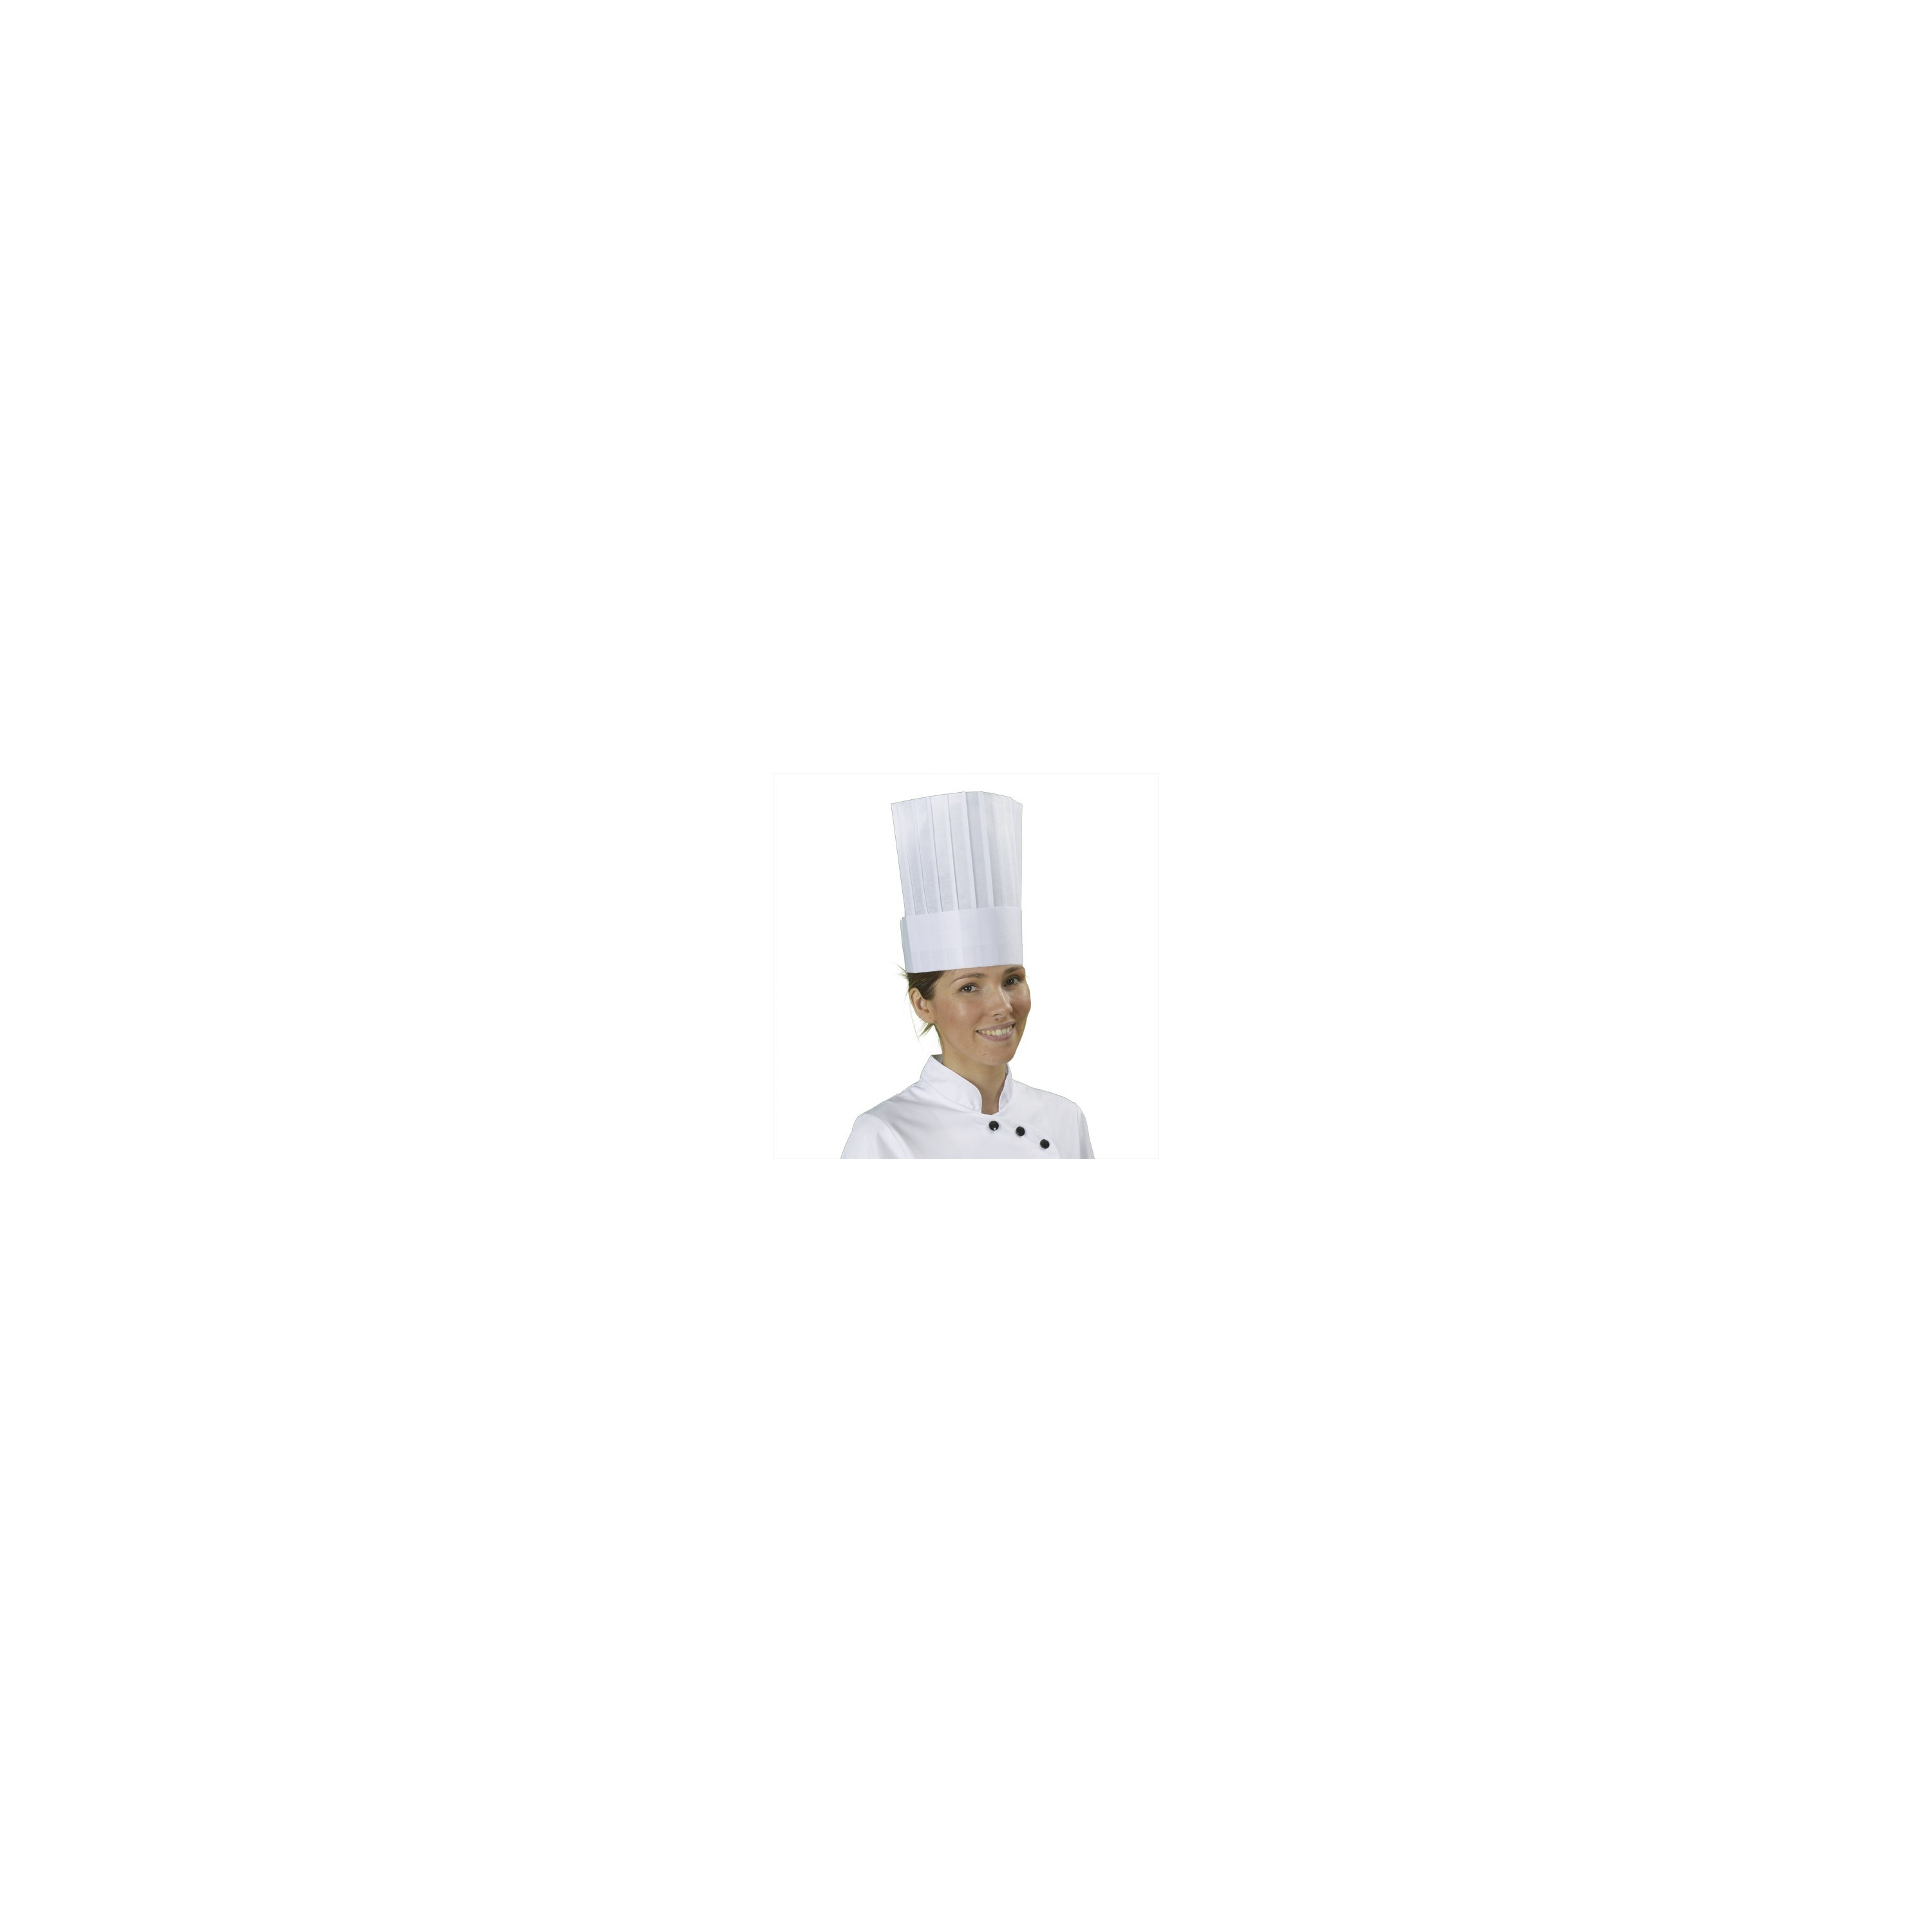 Toque de chef cuisinier blanc